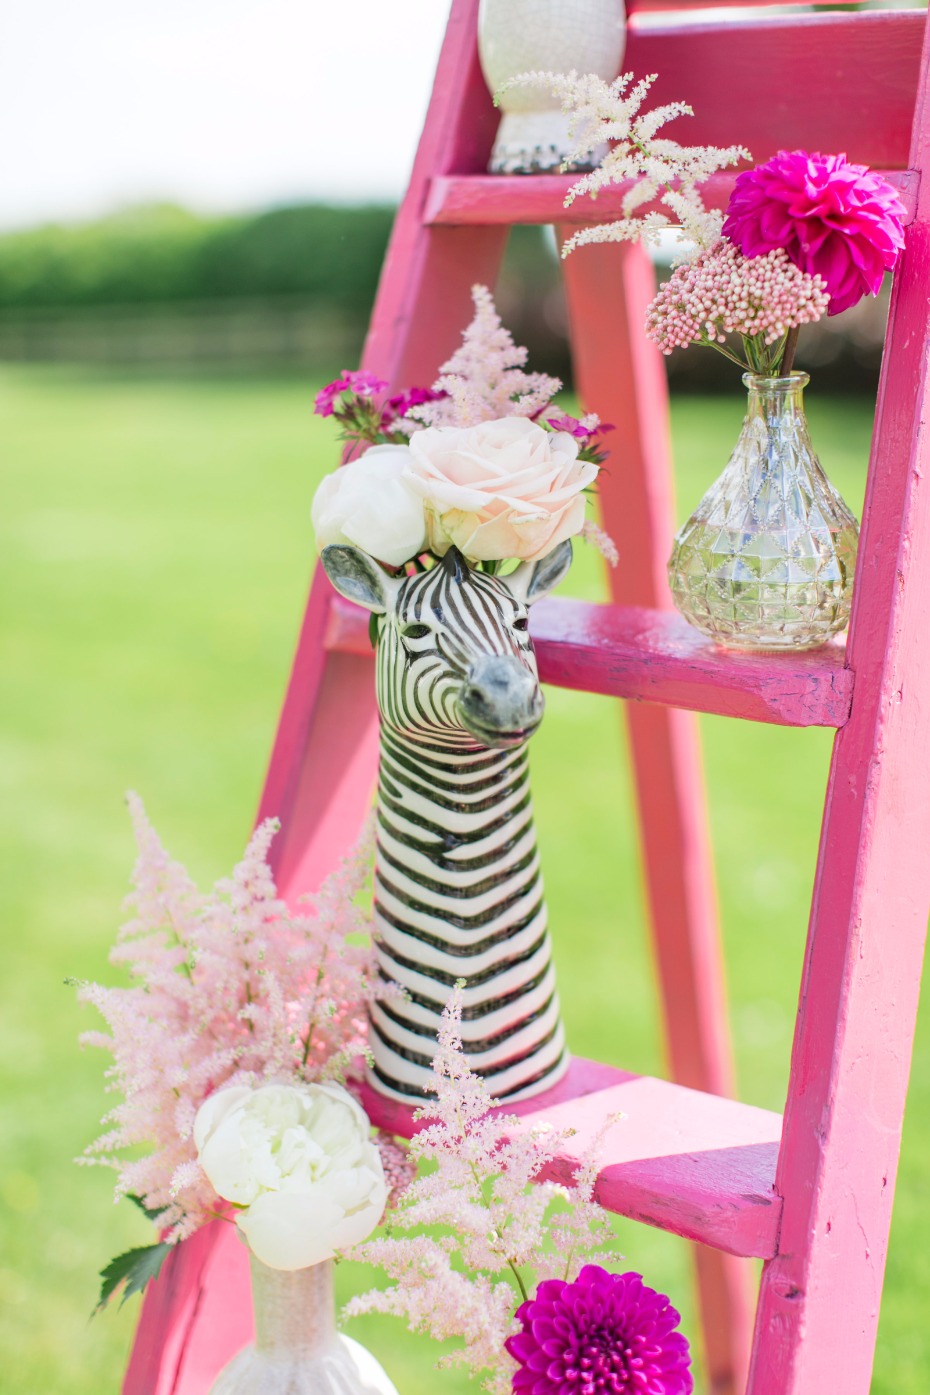 Zebra vase for a circus inspired wedding